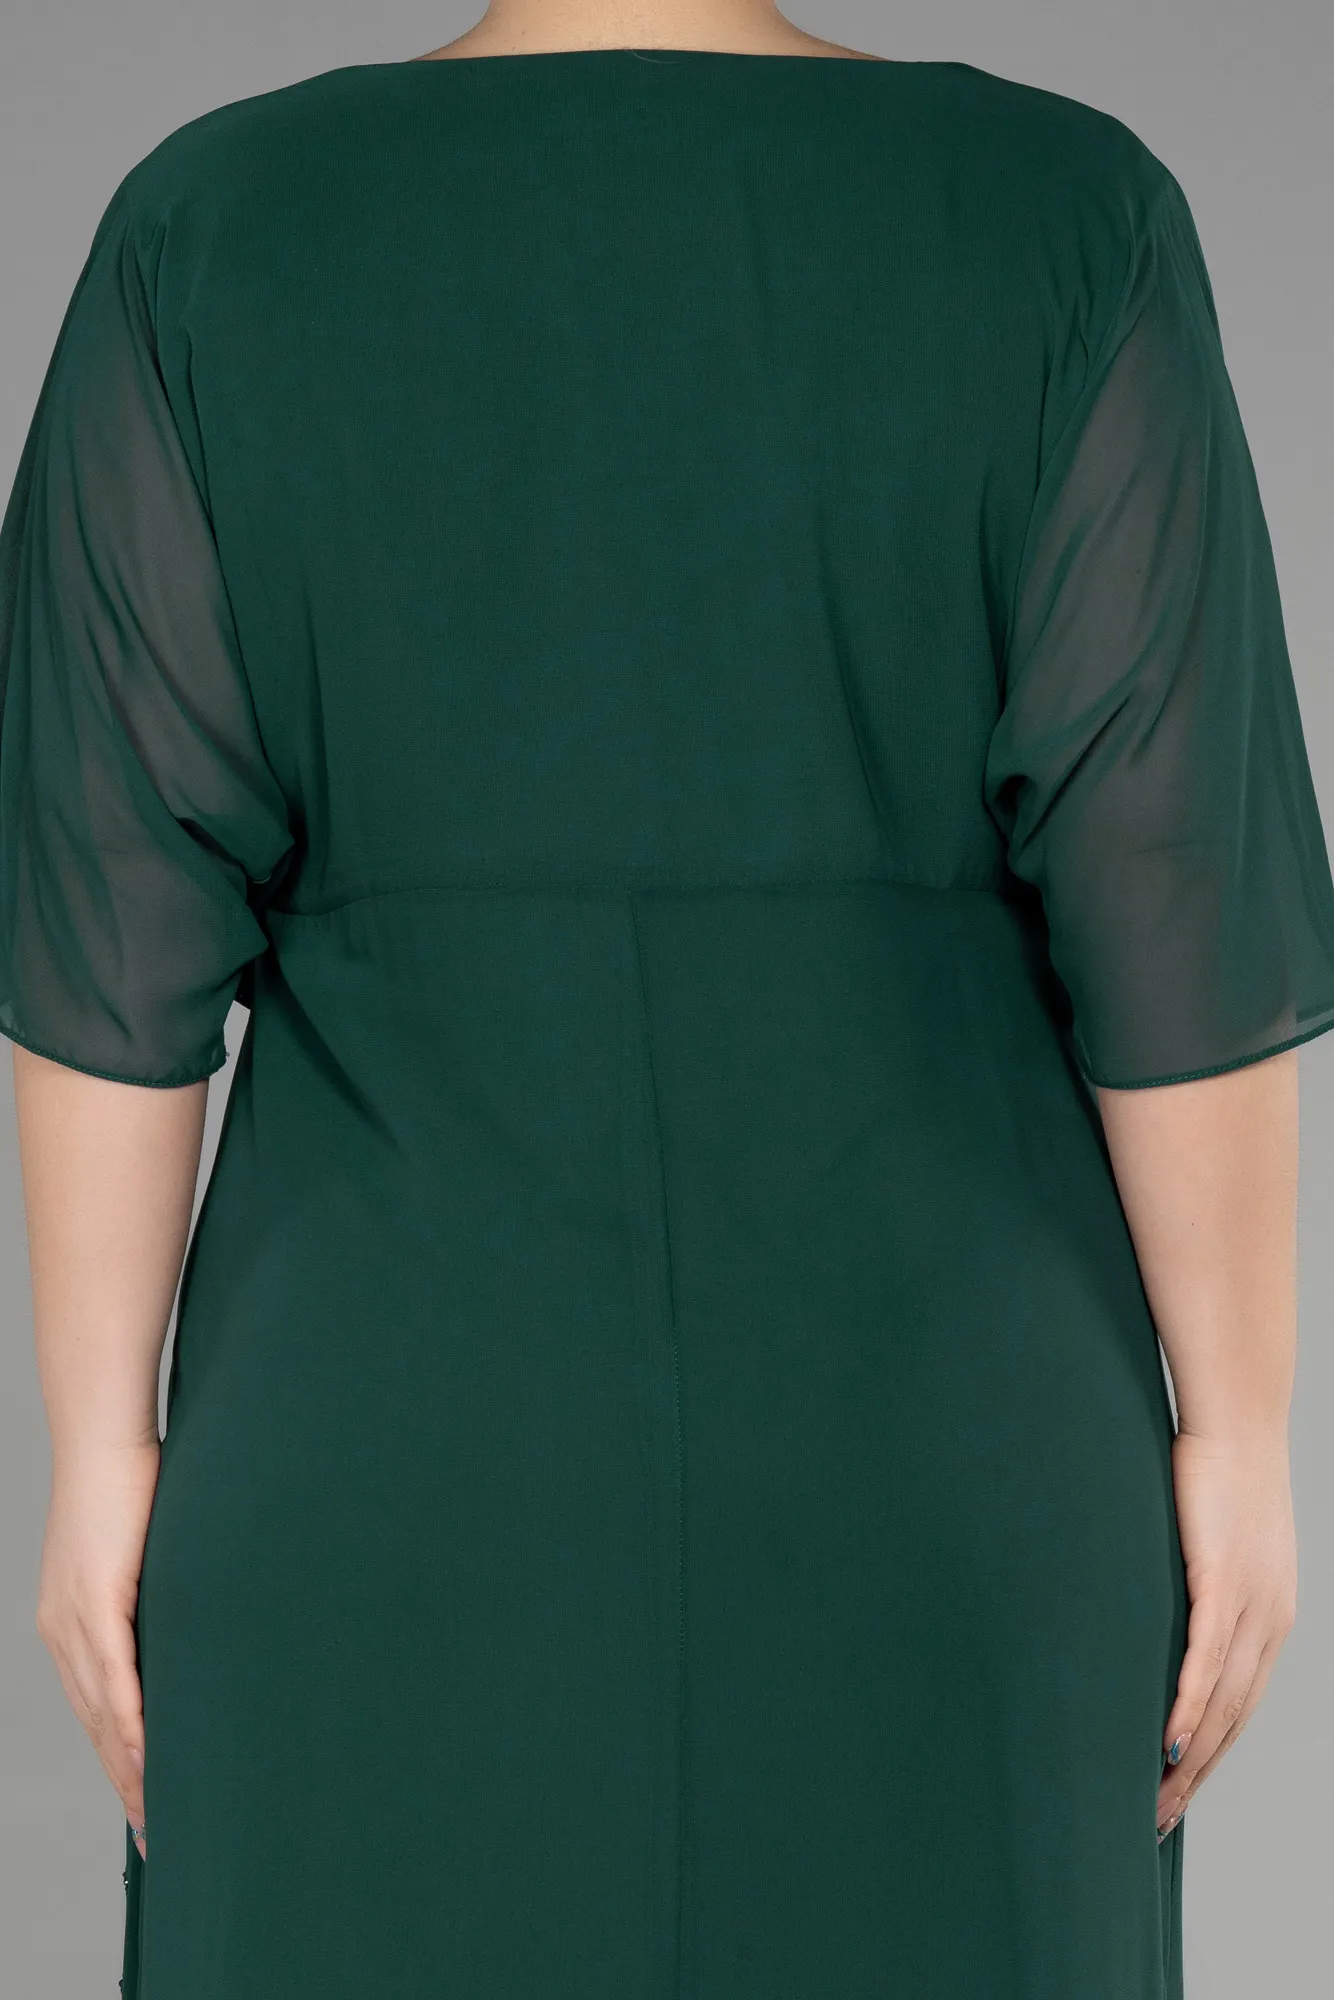 Emerald Green-Long Chiffon Designer Plus Size Gowns ABU3651